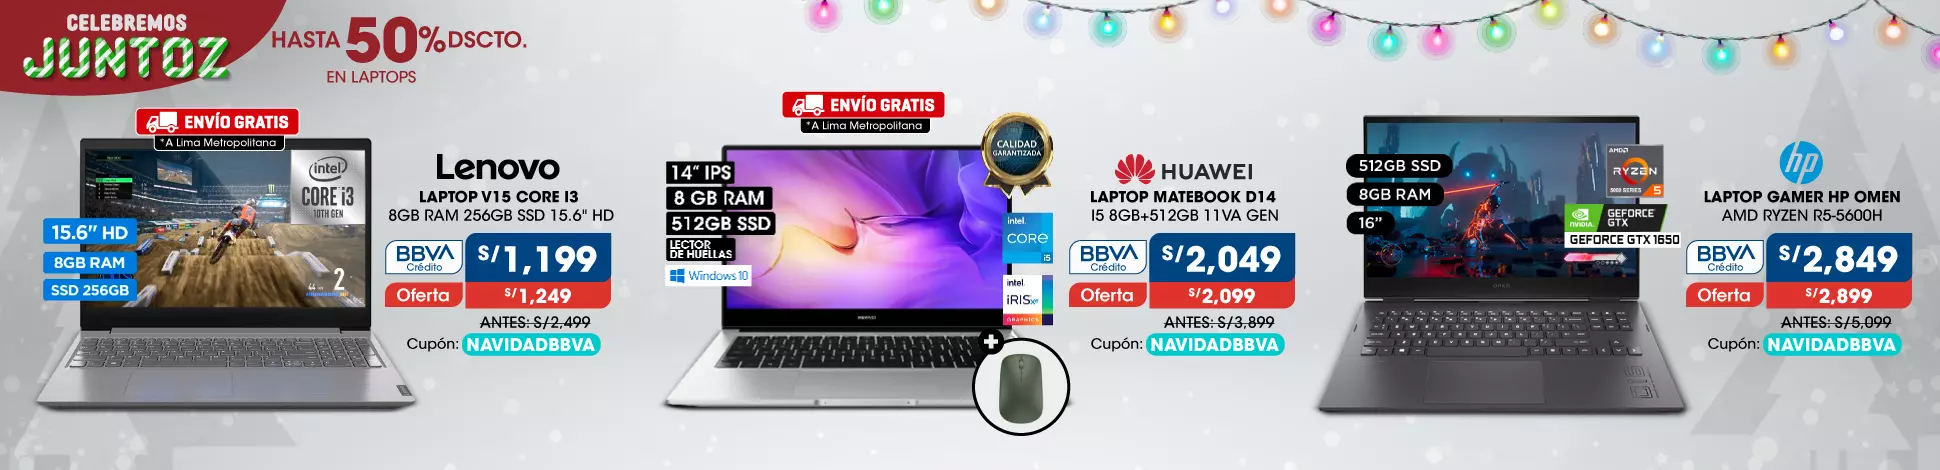 hs-navidadCJ-laptops (0892bf35-c62c-4894-b3df-5c07b8d84690).webp | Juntoz.com